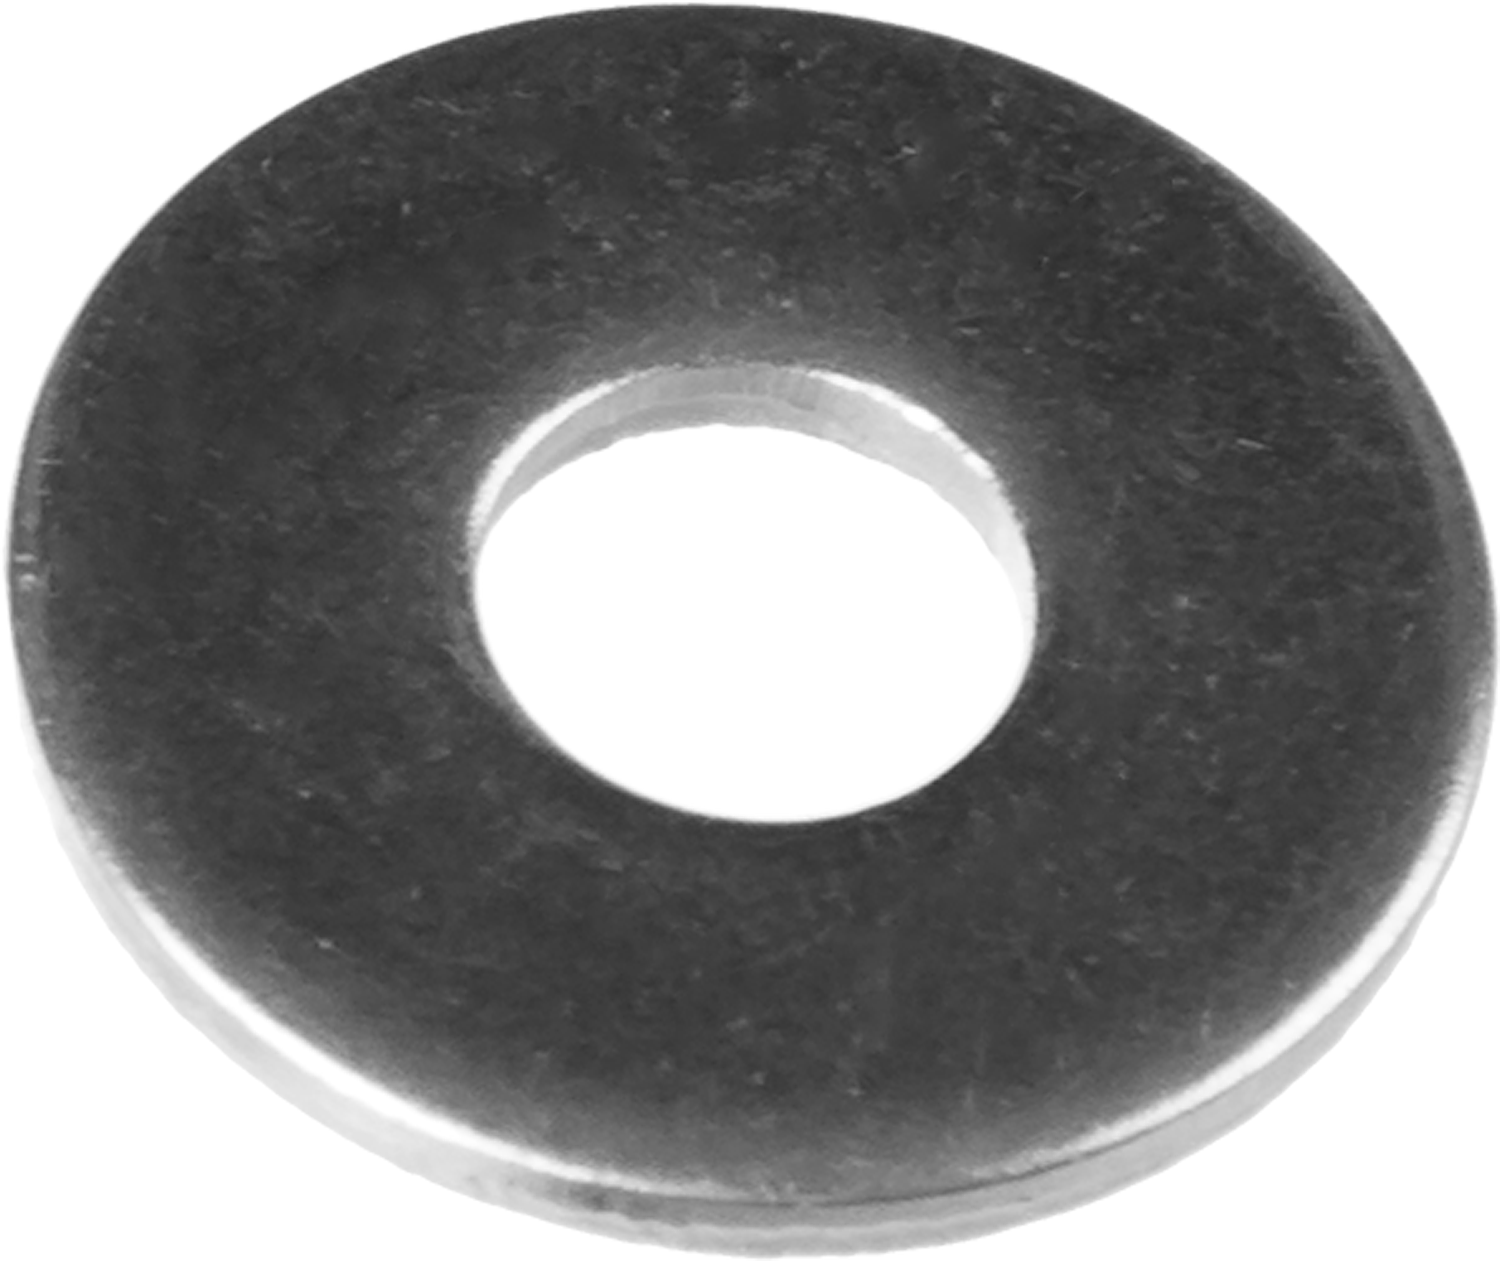 Шайба кузовная Зубр, 9021 DIN, 4 мм, оцинкованная сталь, фасовка 5 кг (303820-04)